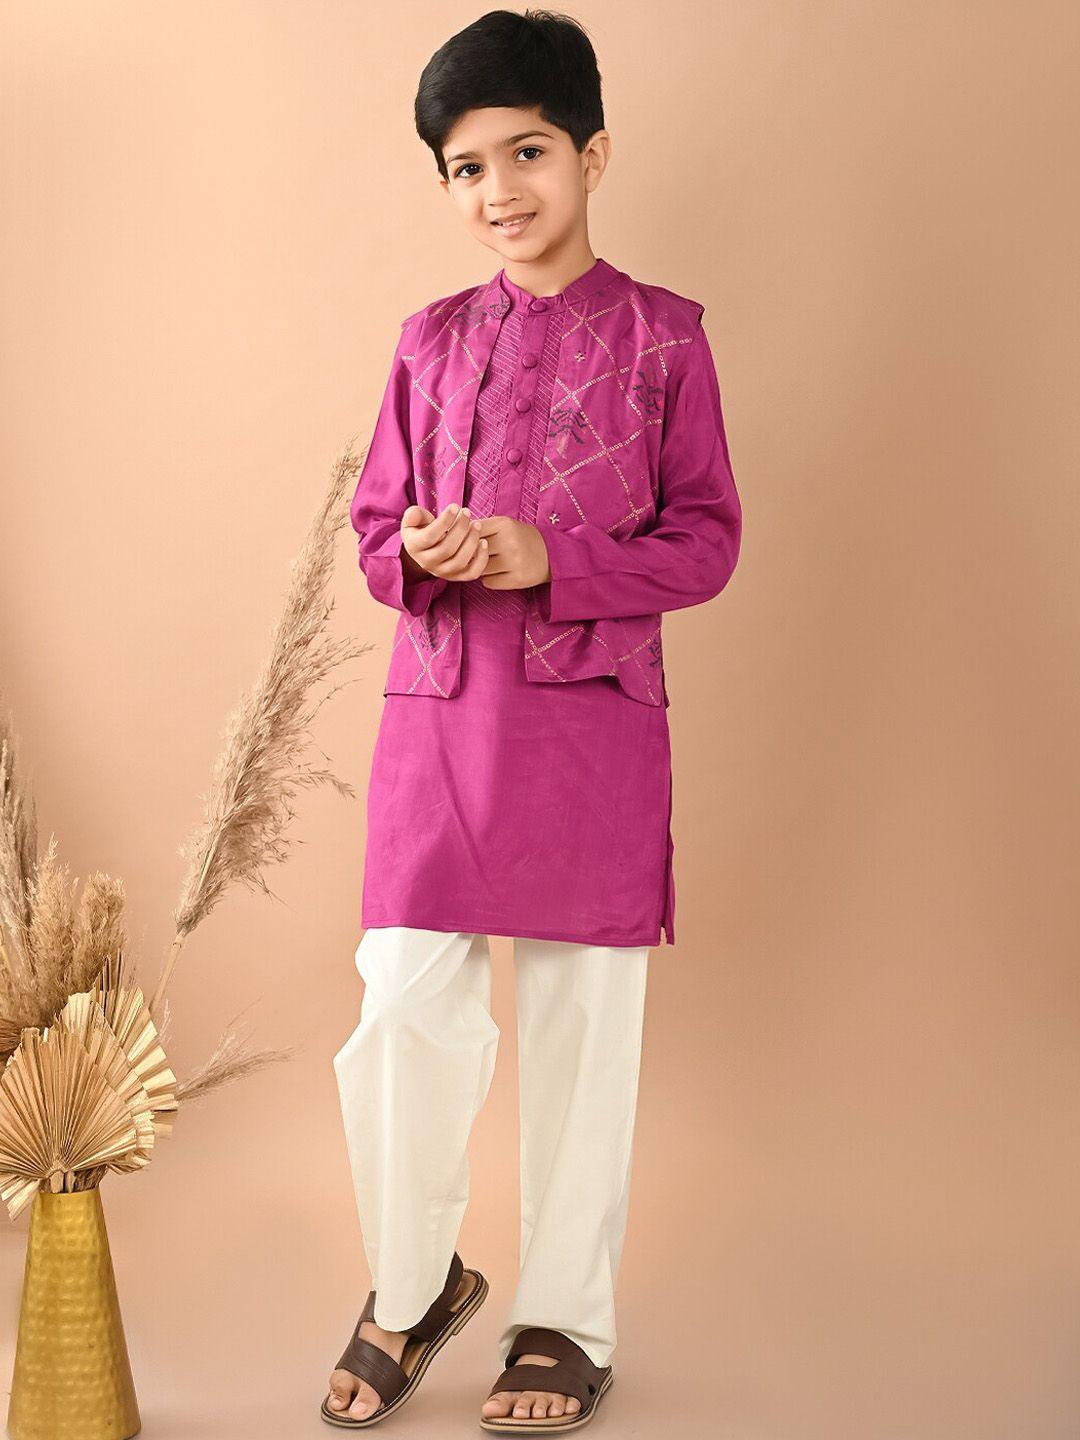 lilpicks boys embroidered regular pure cotton kurta with pyjamas with jacket